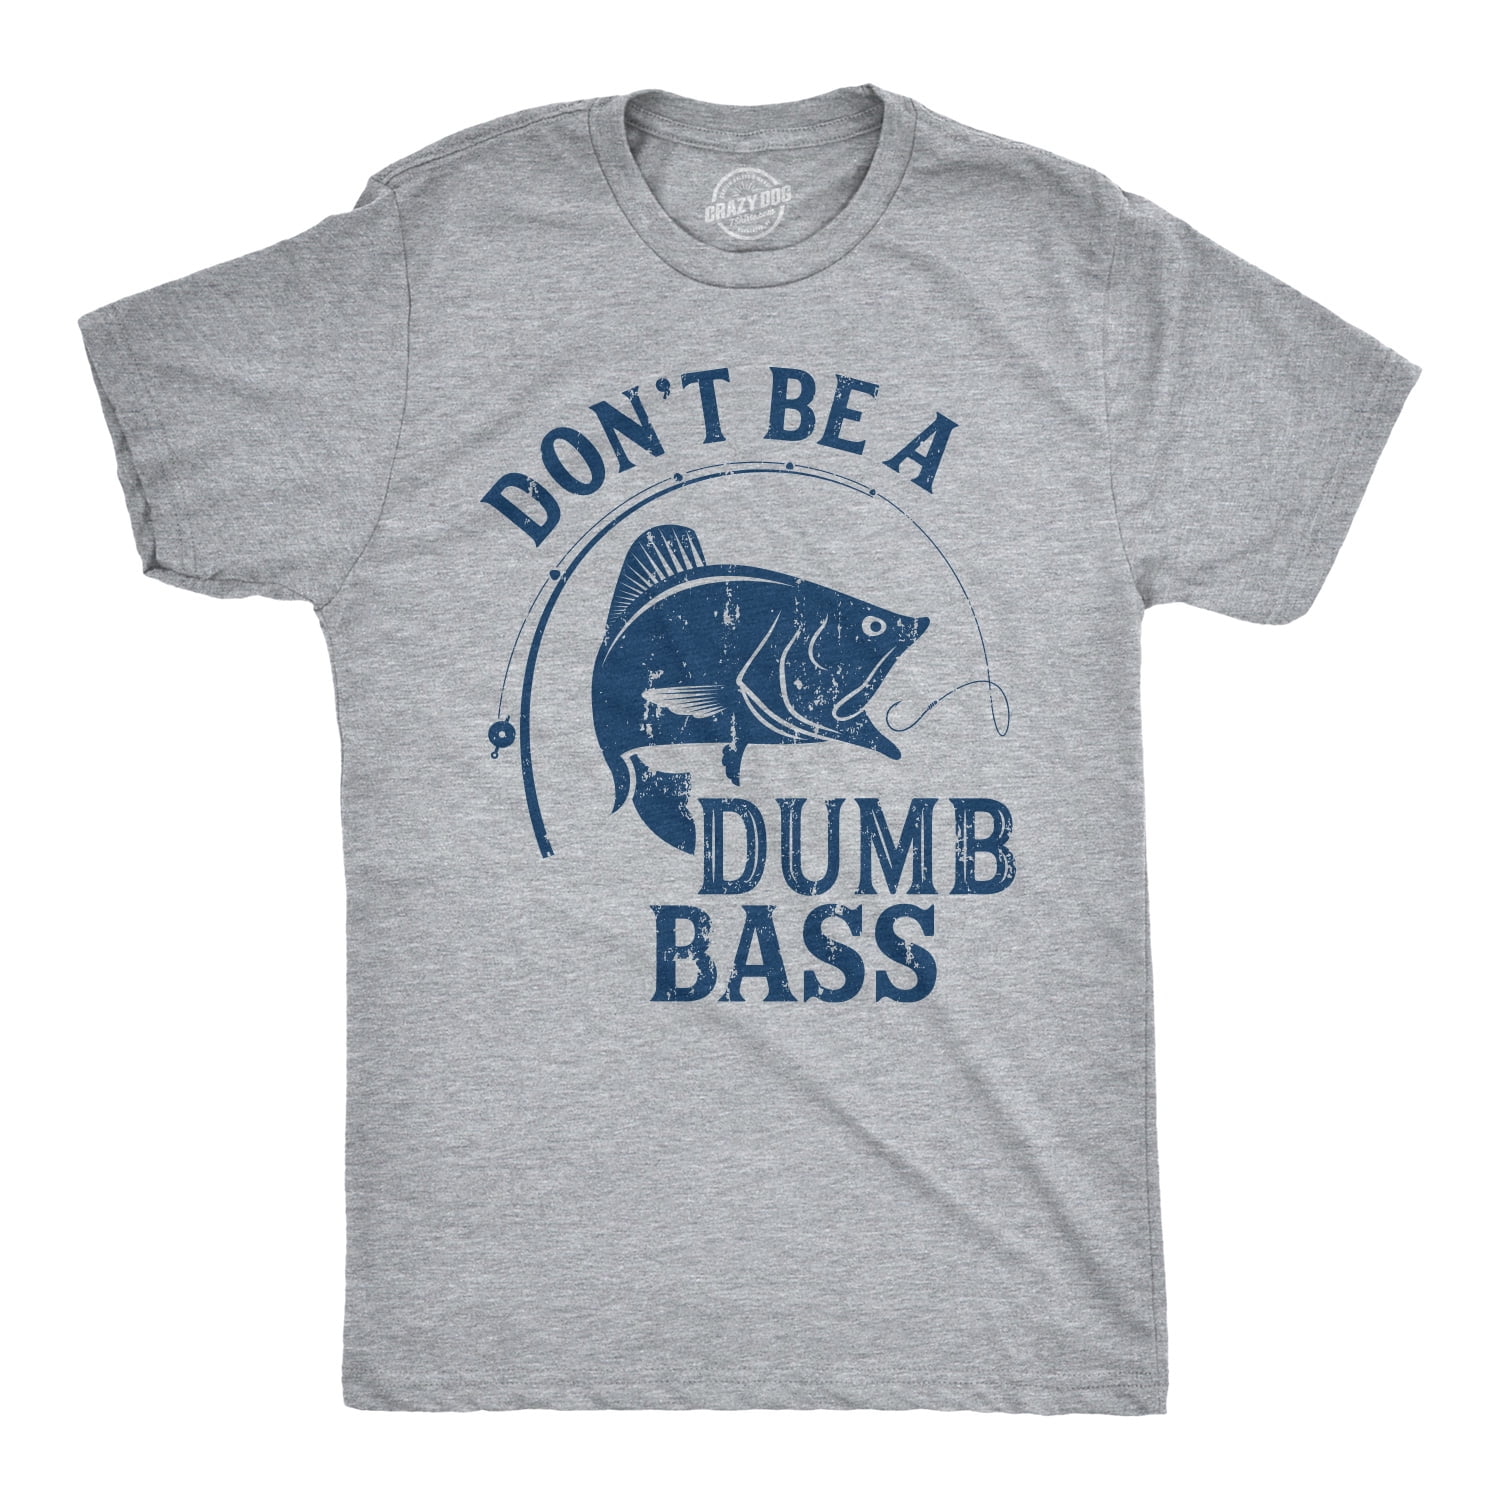 Fish Shirt for Fish Lovers Fishing Gifts T-Shirt Fisherman Shirt Funny Vintage Girl Fishing T-Shirt